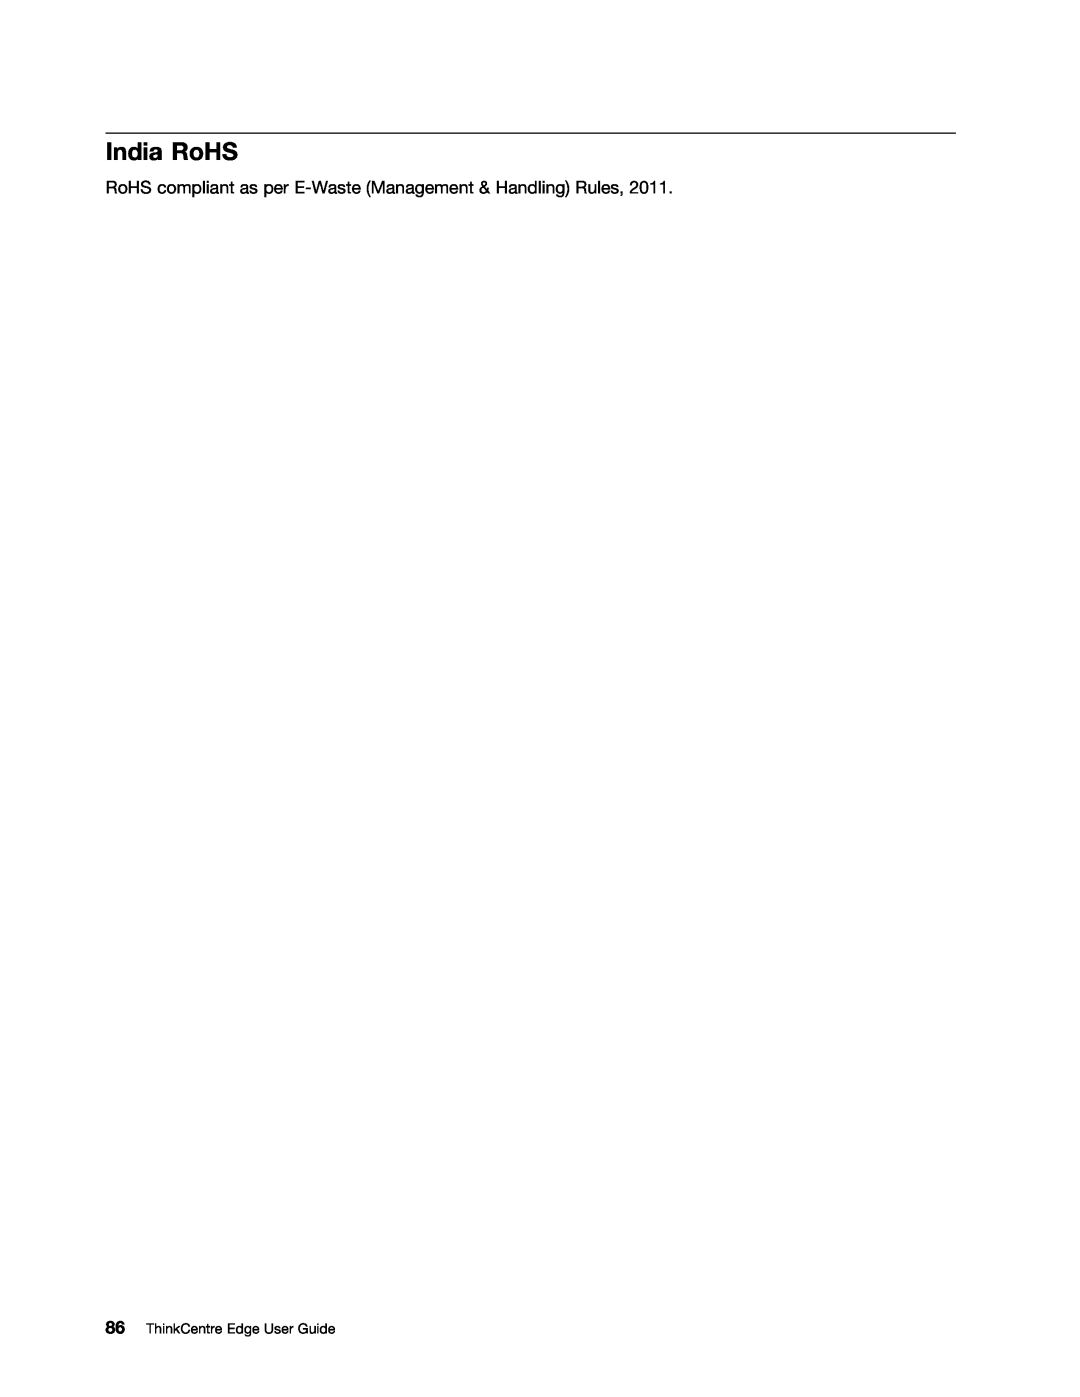 Lenovo 2117EKU manual India RoHS, RoHS compliant as per E-Waste Management & Handling Rules 